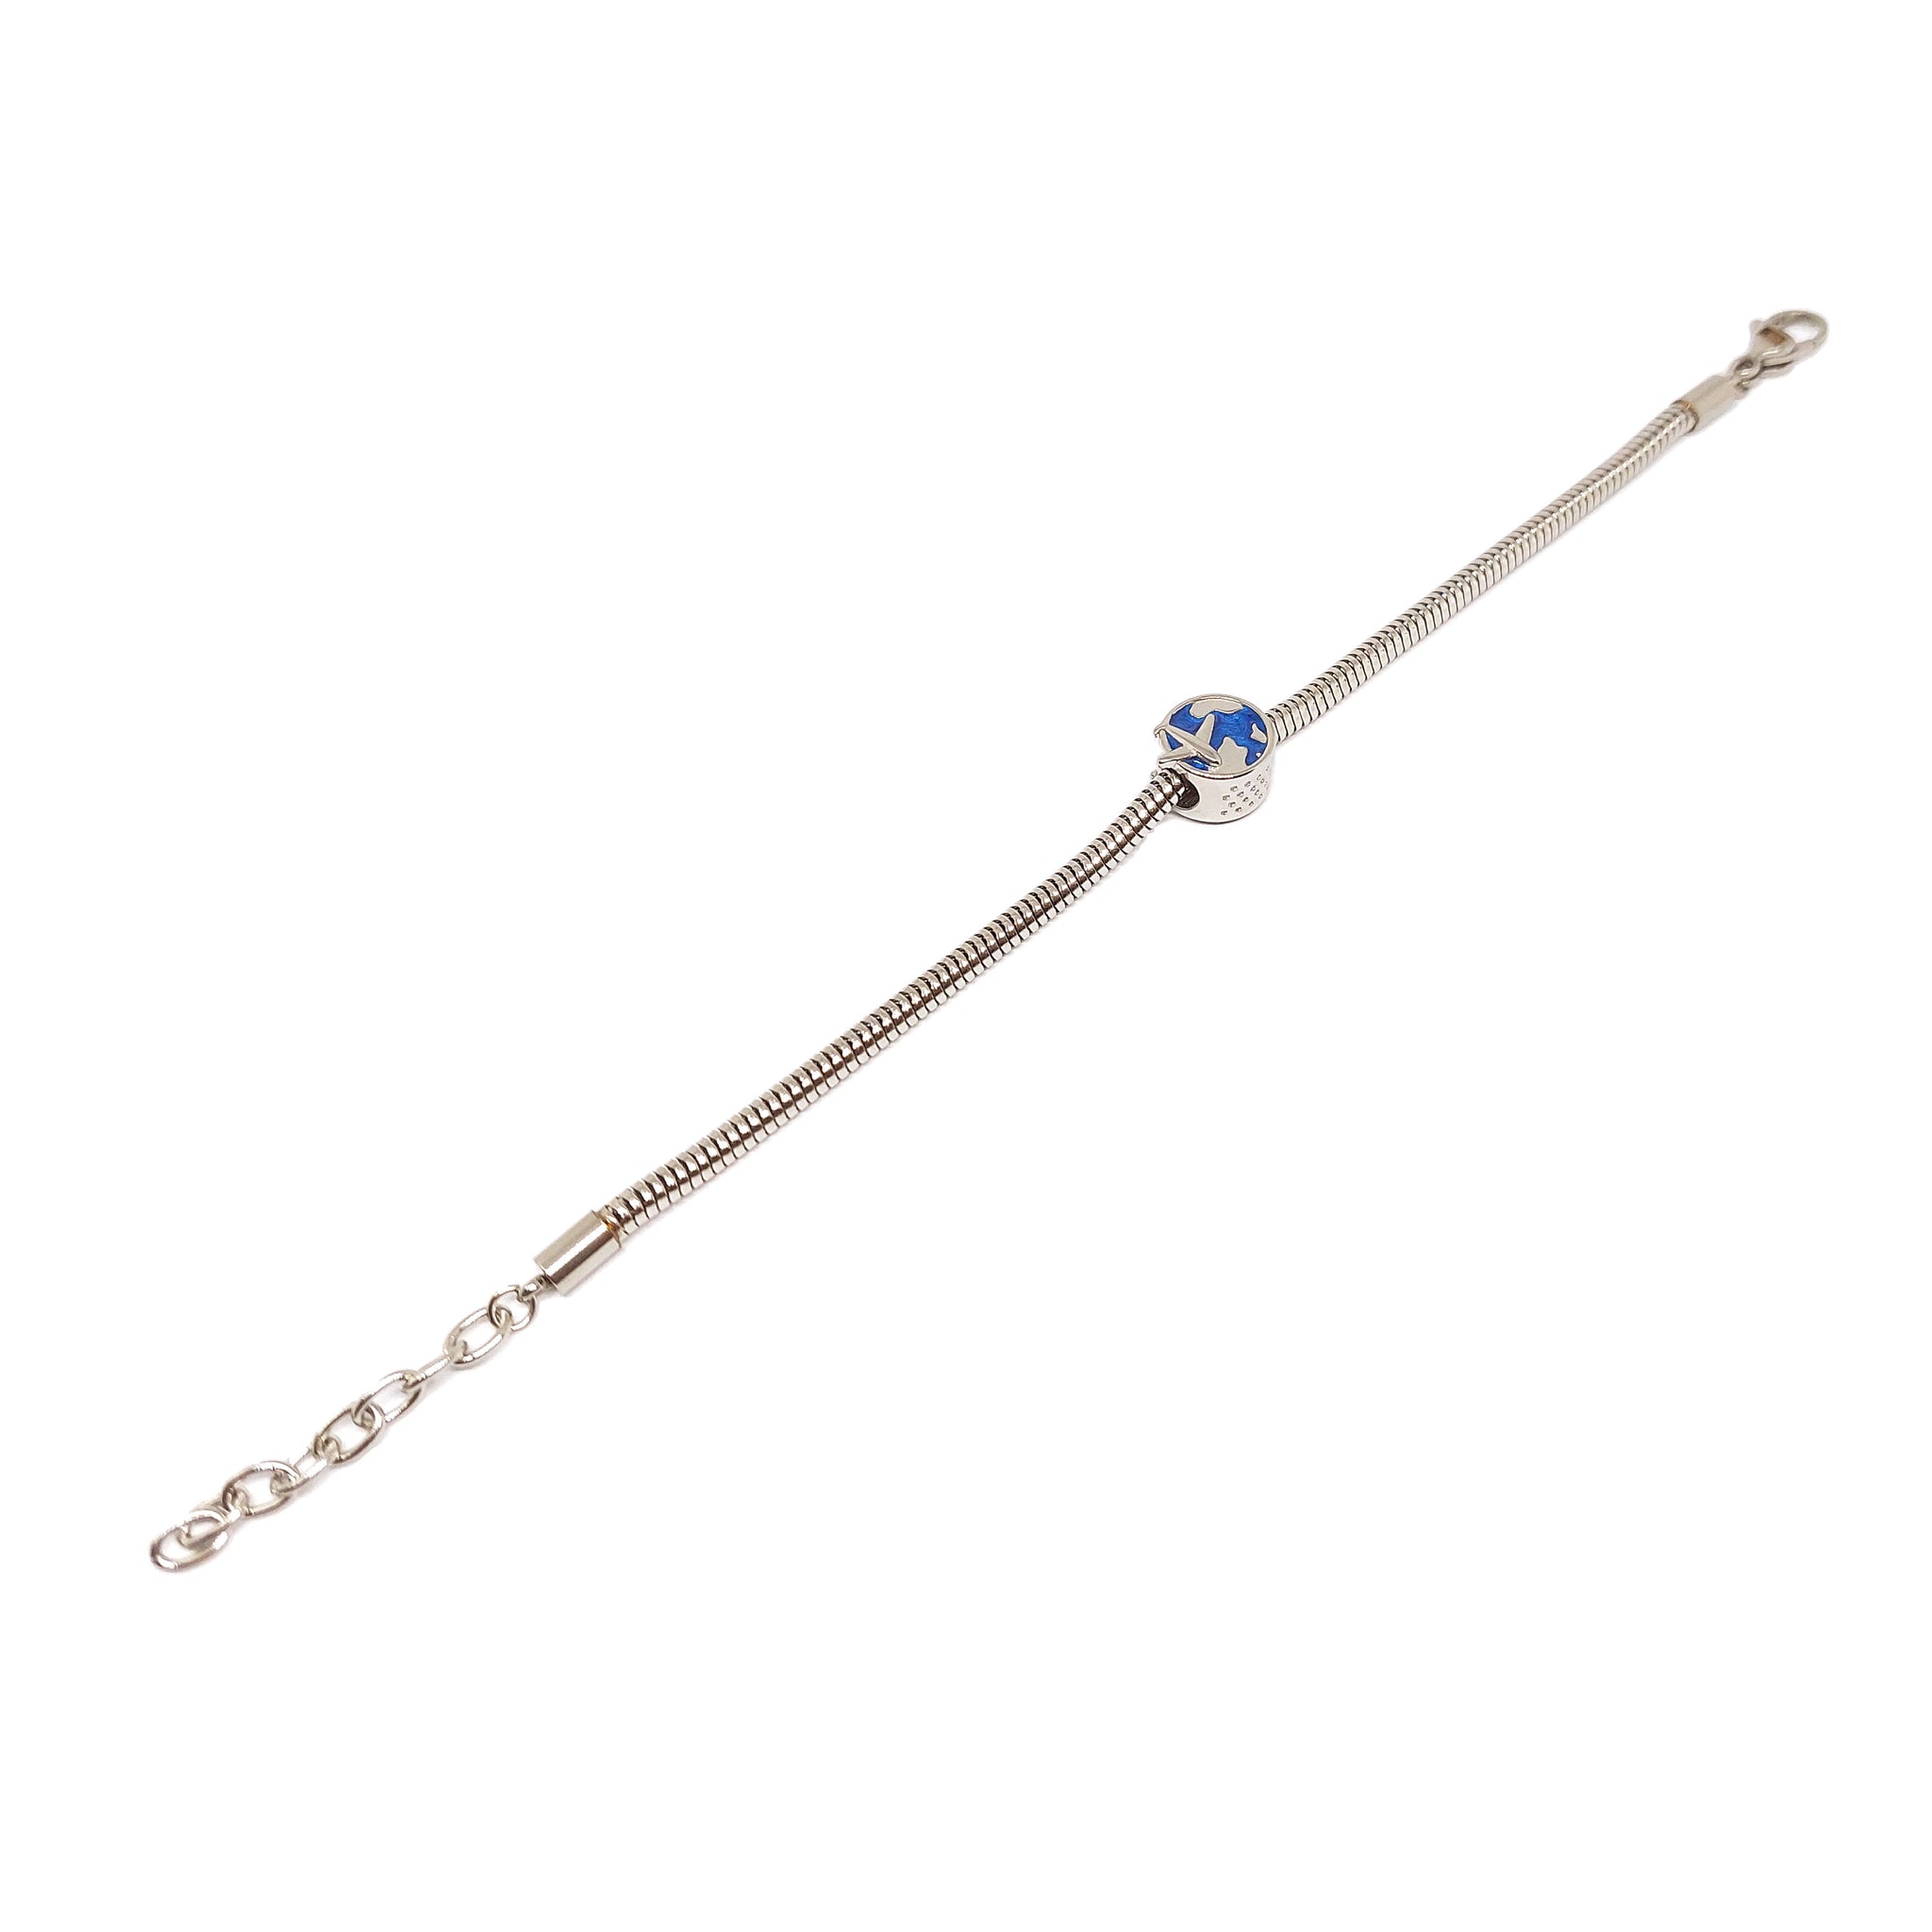 ESBL 7936: Adjustable Steel Bracelet w/ "I Love to Travel" Charm